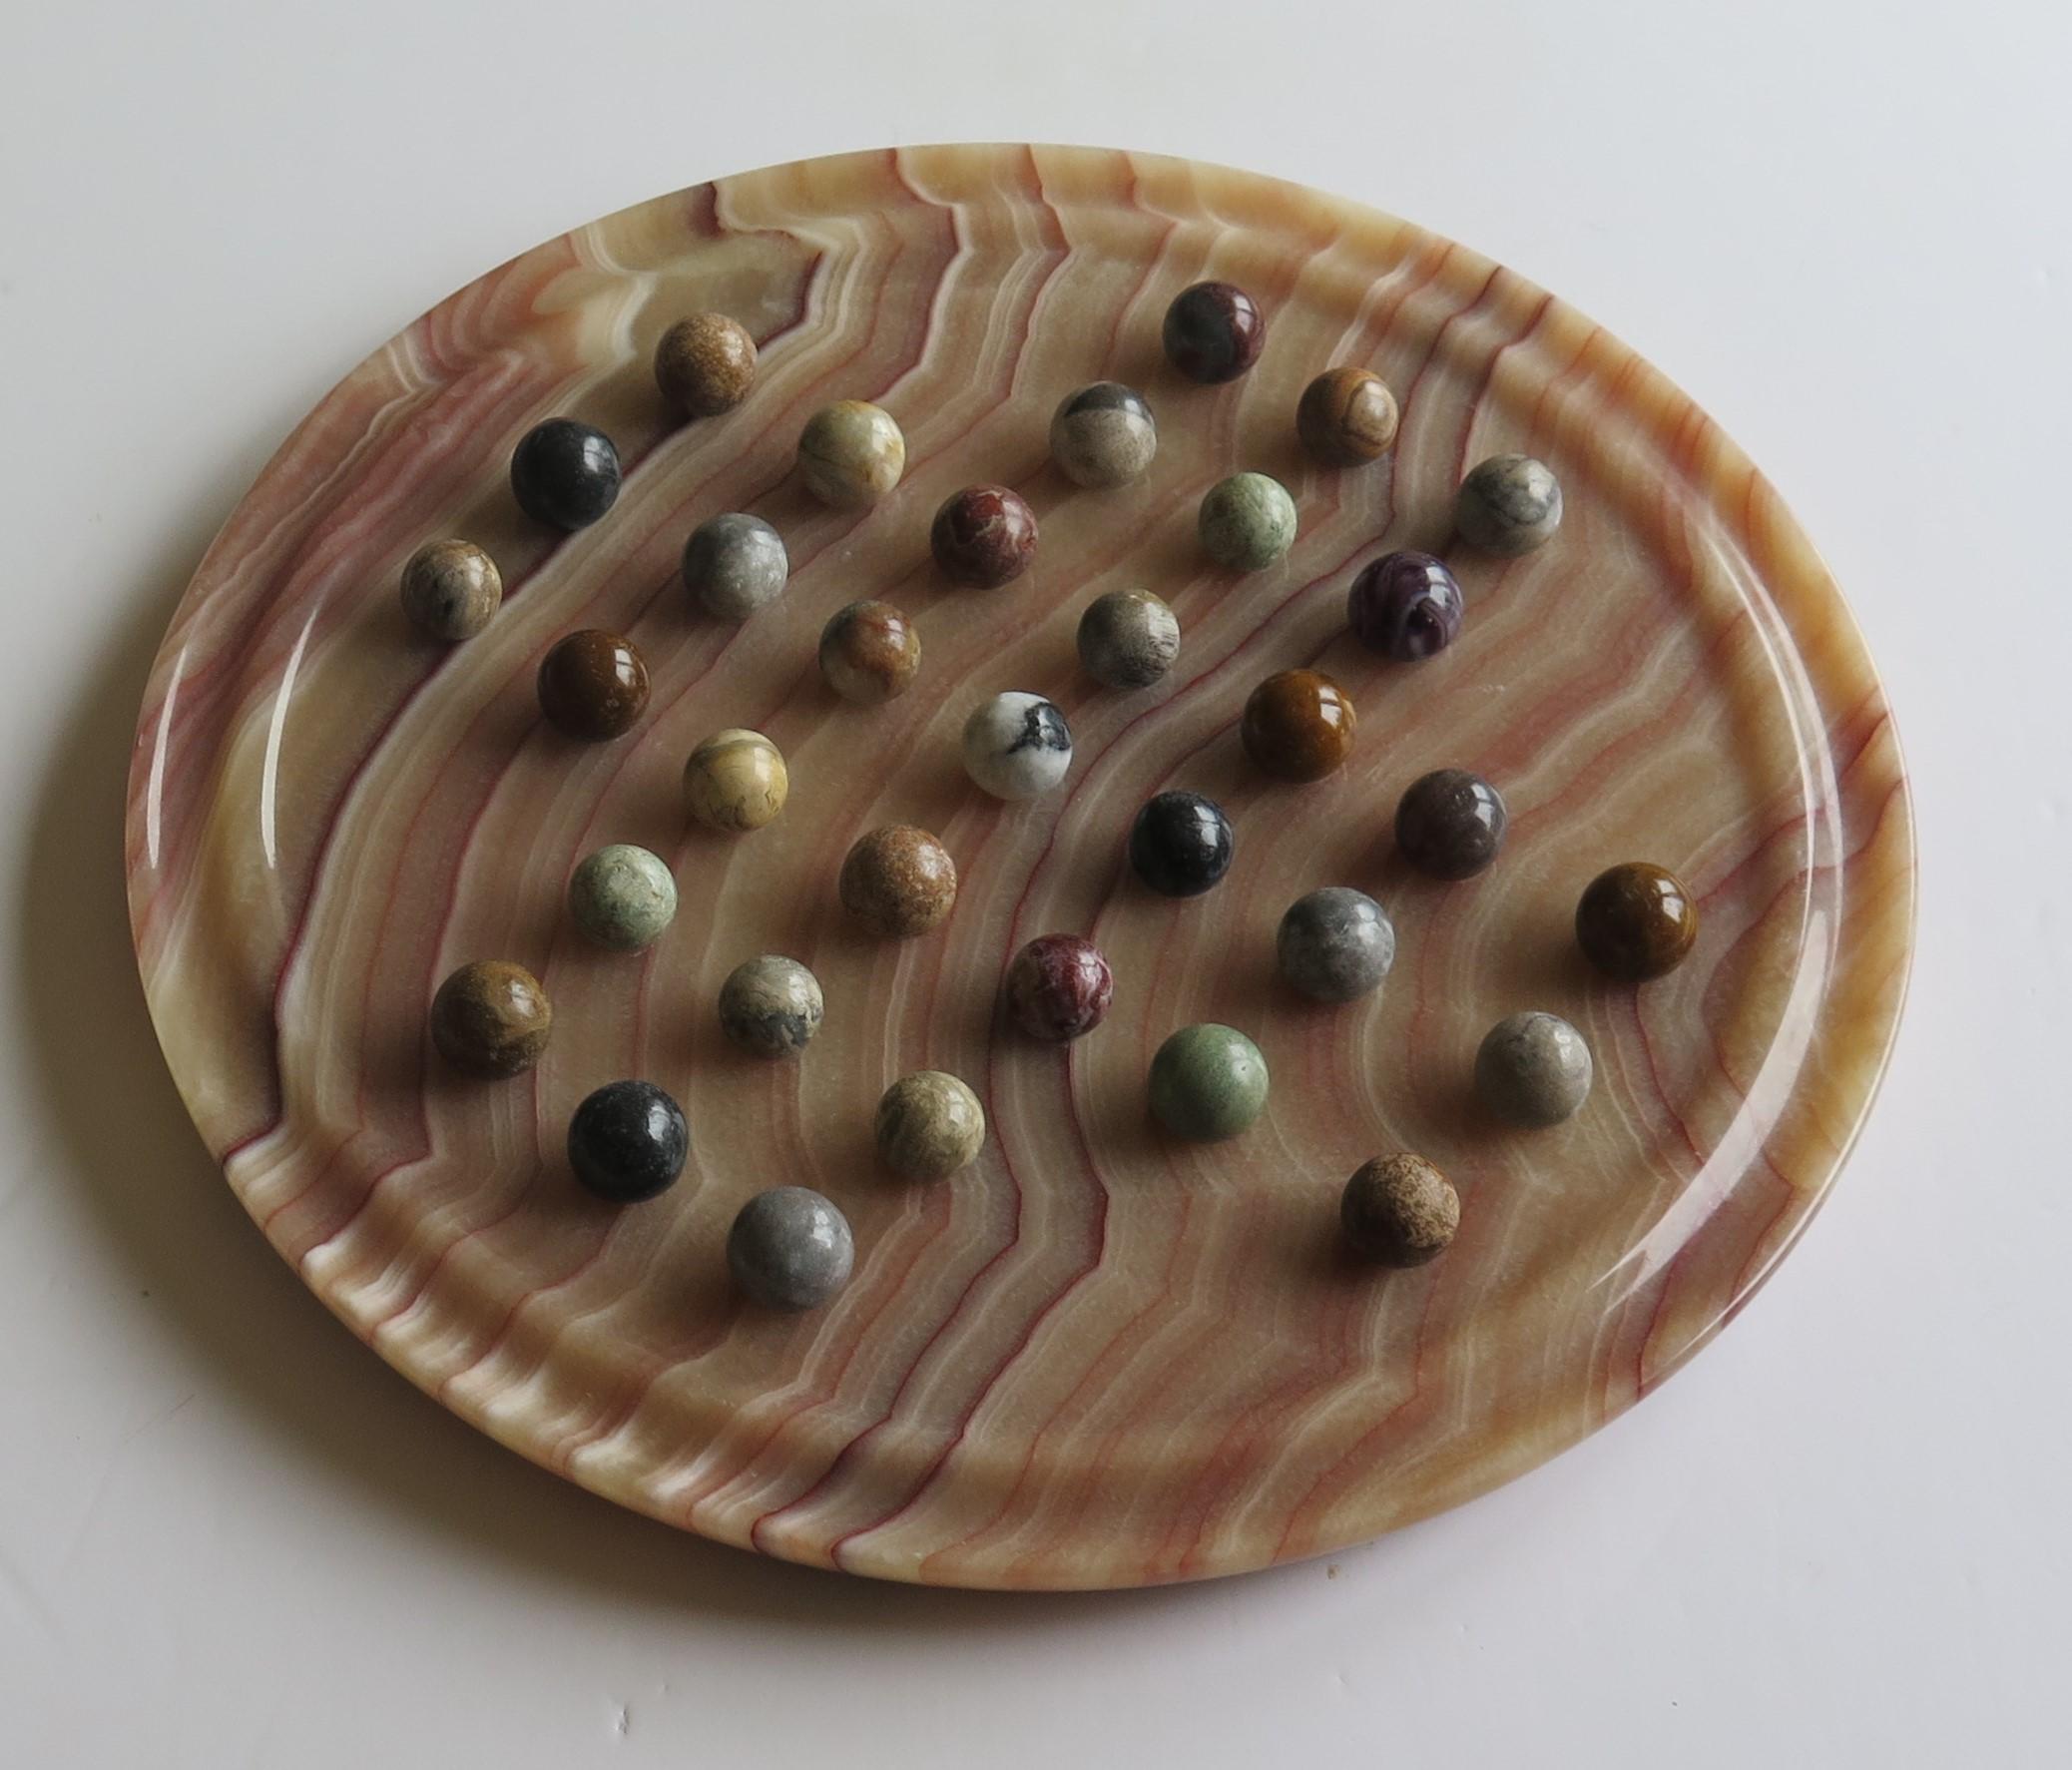 Ceramic Marble Solitaire Board Game Natural Stone Board & 33 Agate Marbles, circa 1950